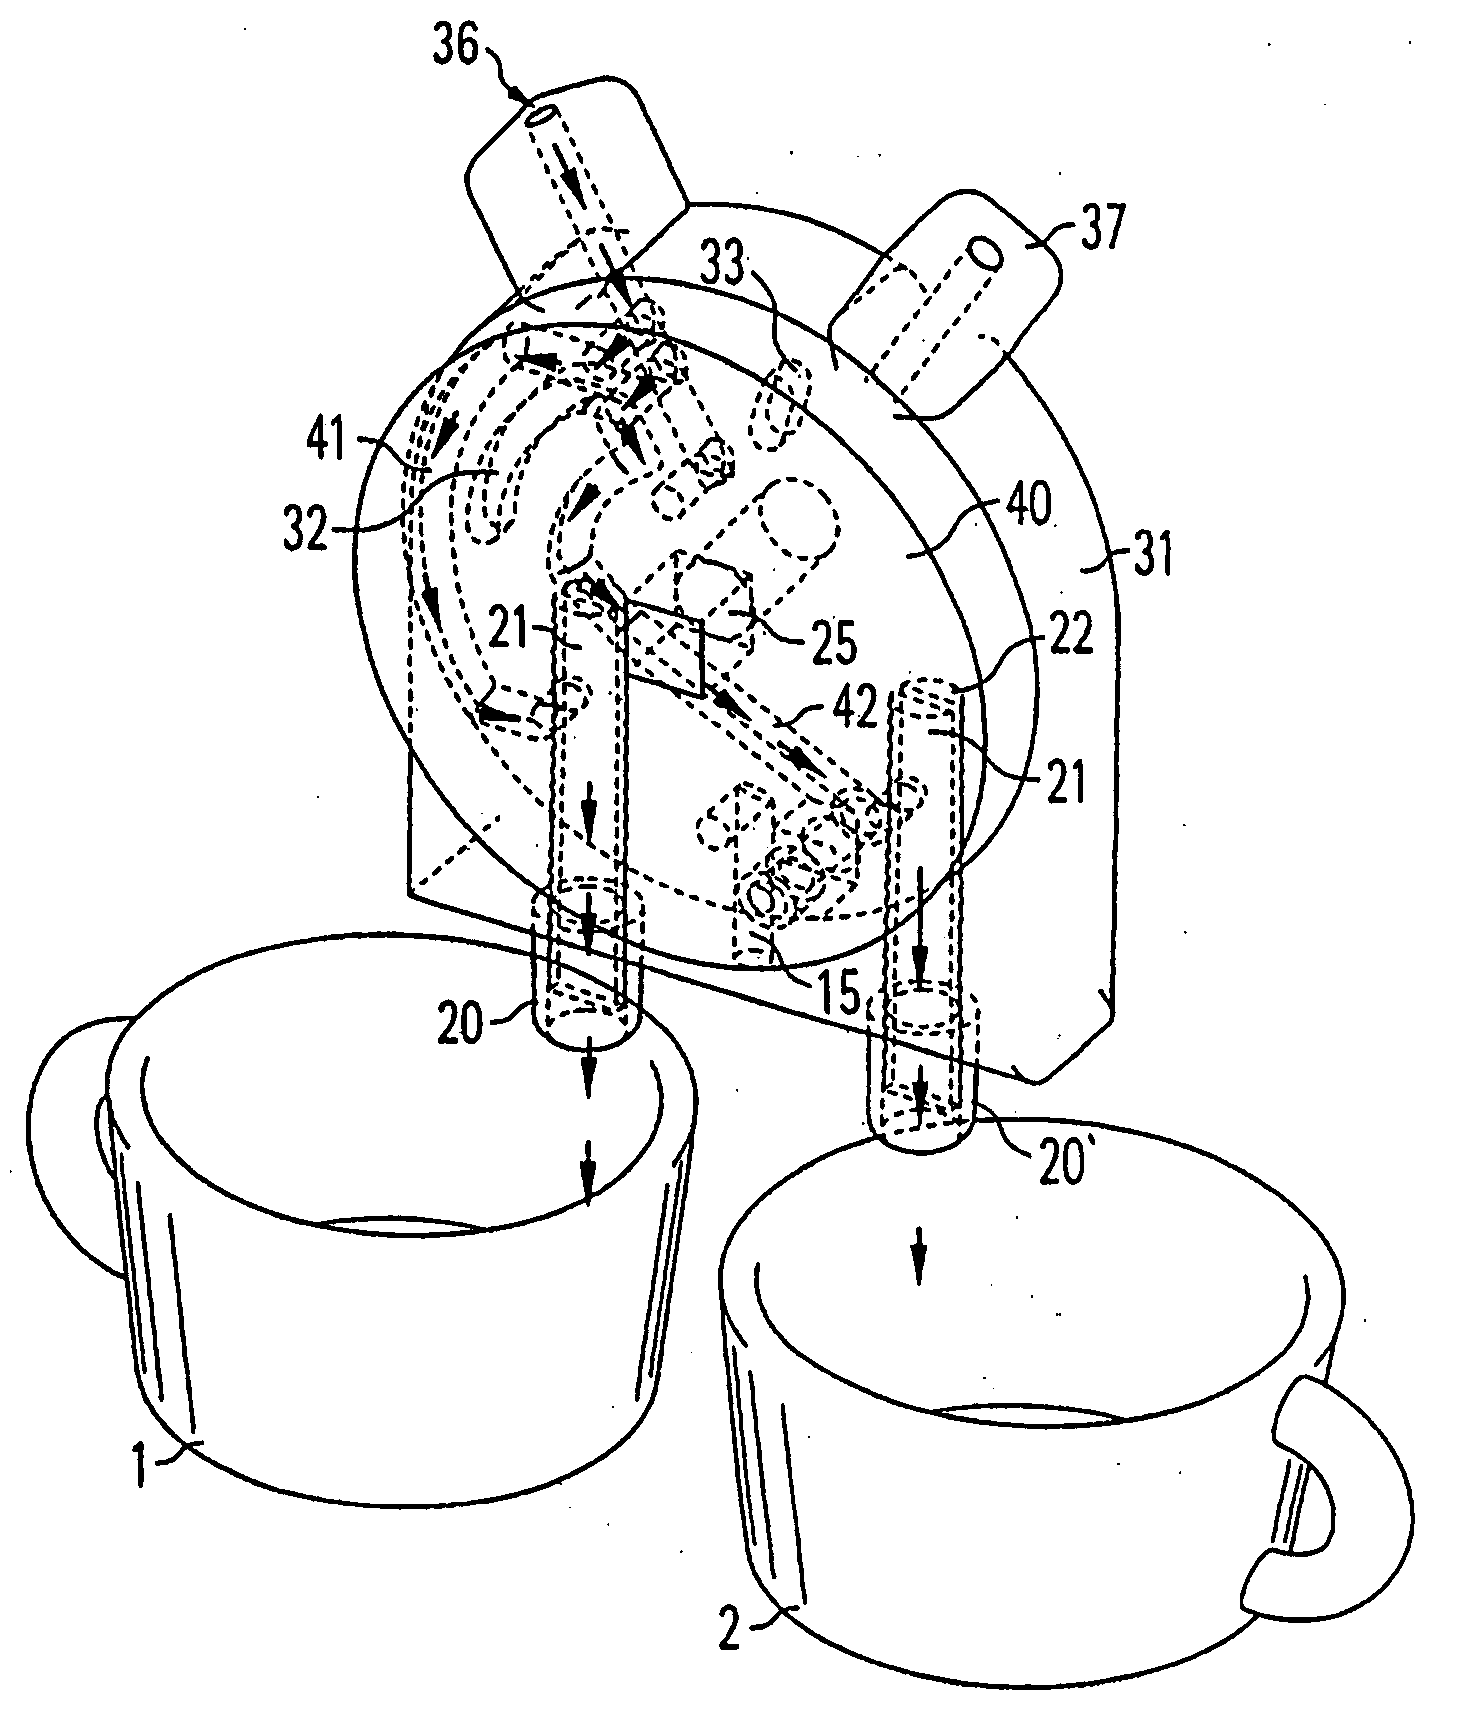 Dispensing device for drinks